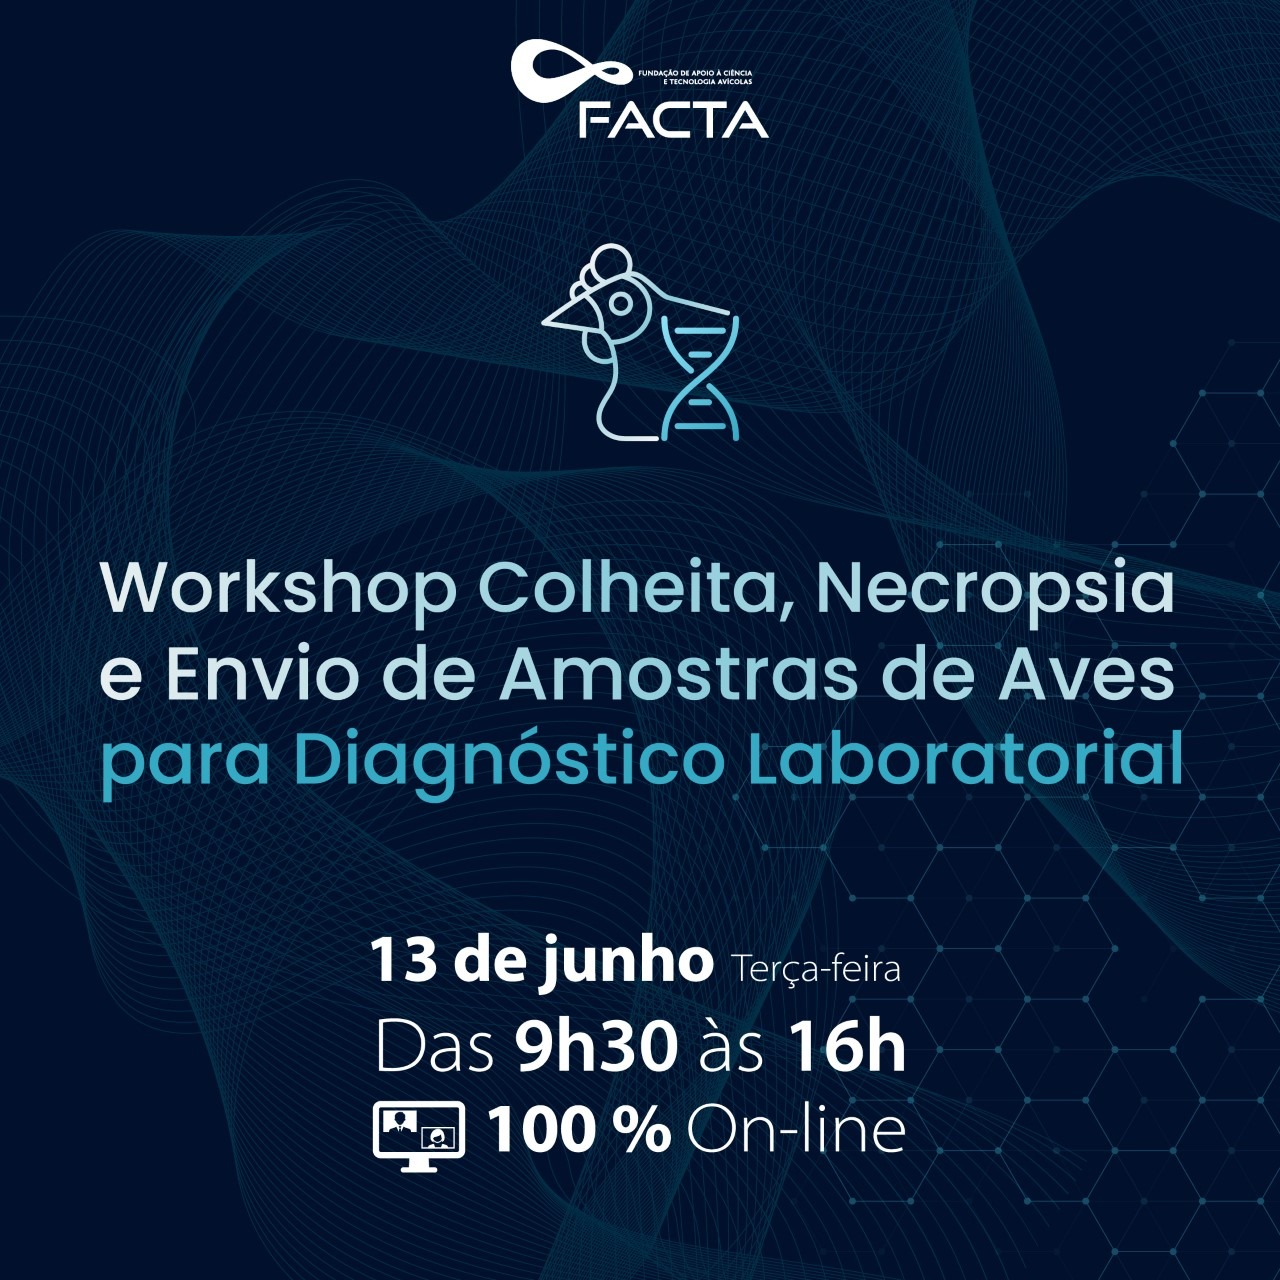 Facta promove Workshop On-line sobre Influenza Aviária